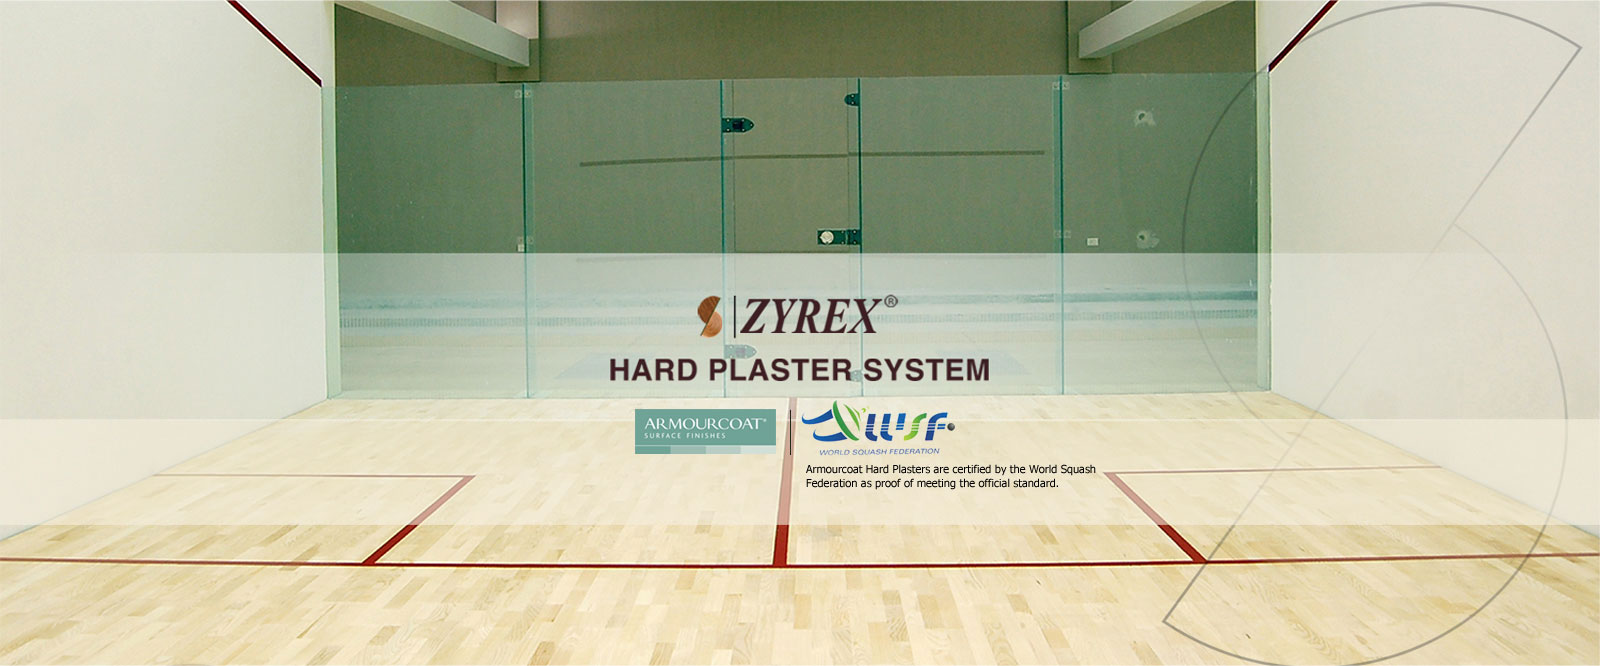 Zyrex - Hard Plaster System